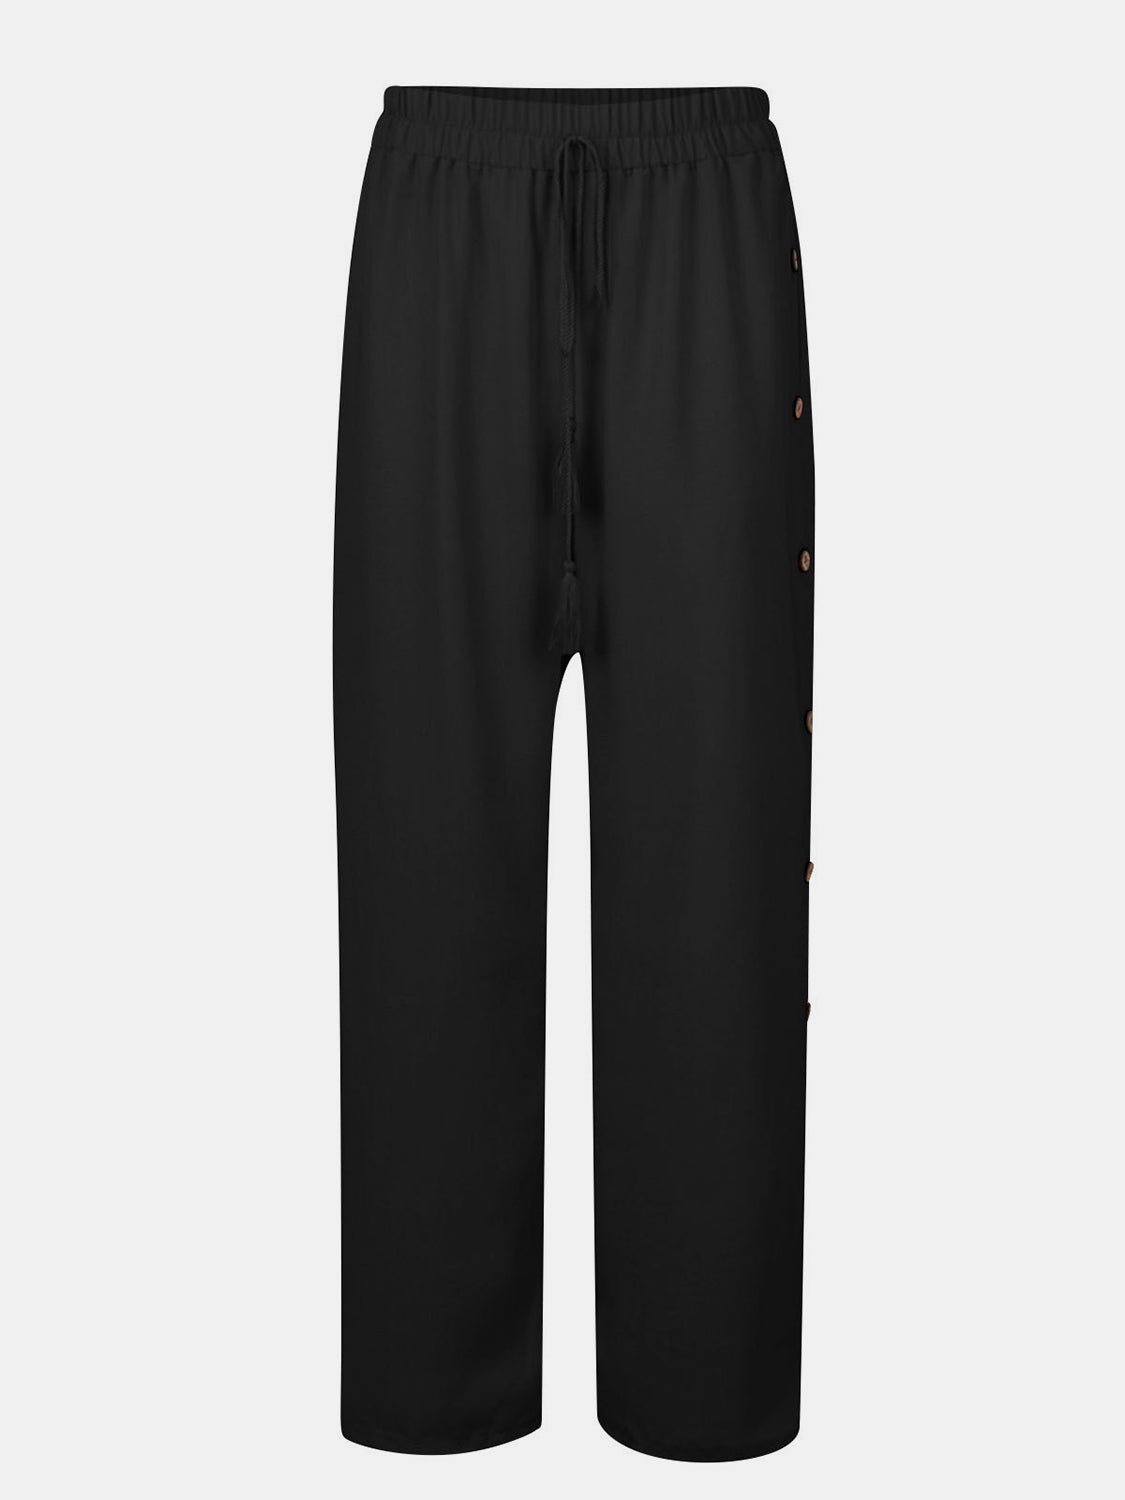 TEEK - Full Size Tassel Wide Leg Pants PANTS TEEK Trend Black S 